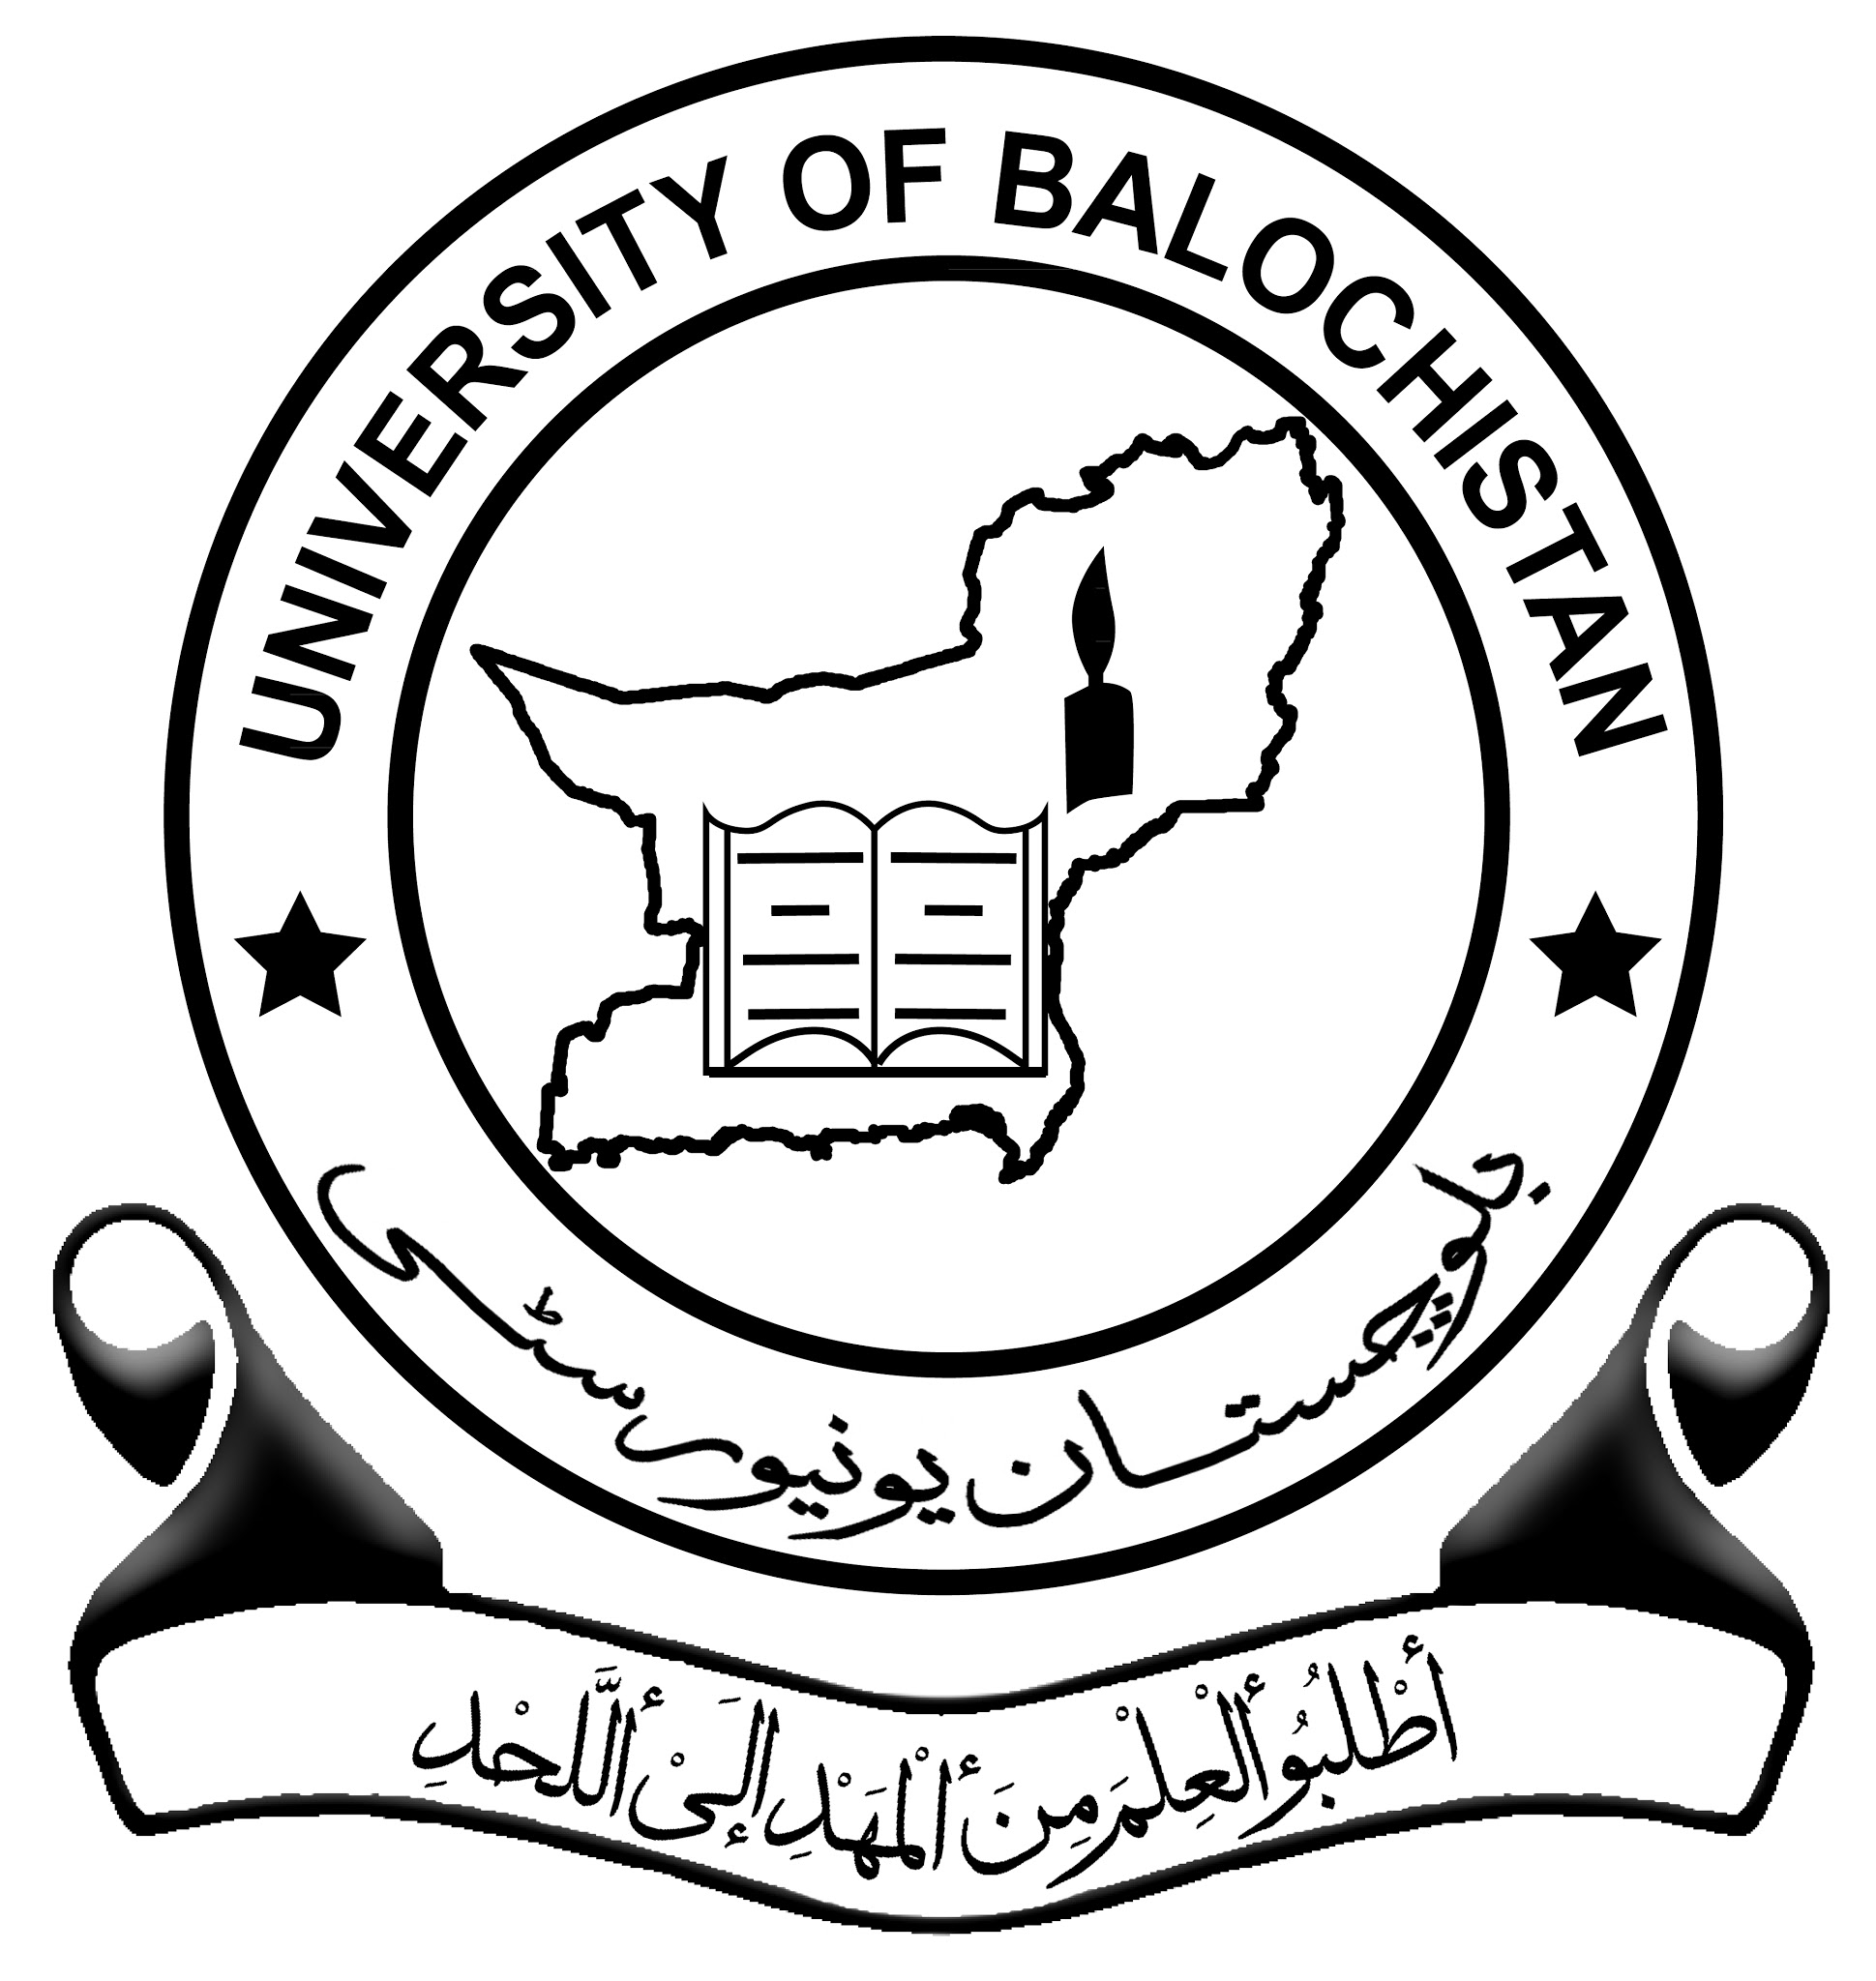 University of Balochistan MA Result 2020